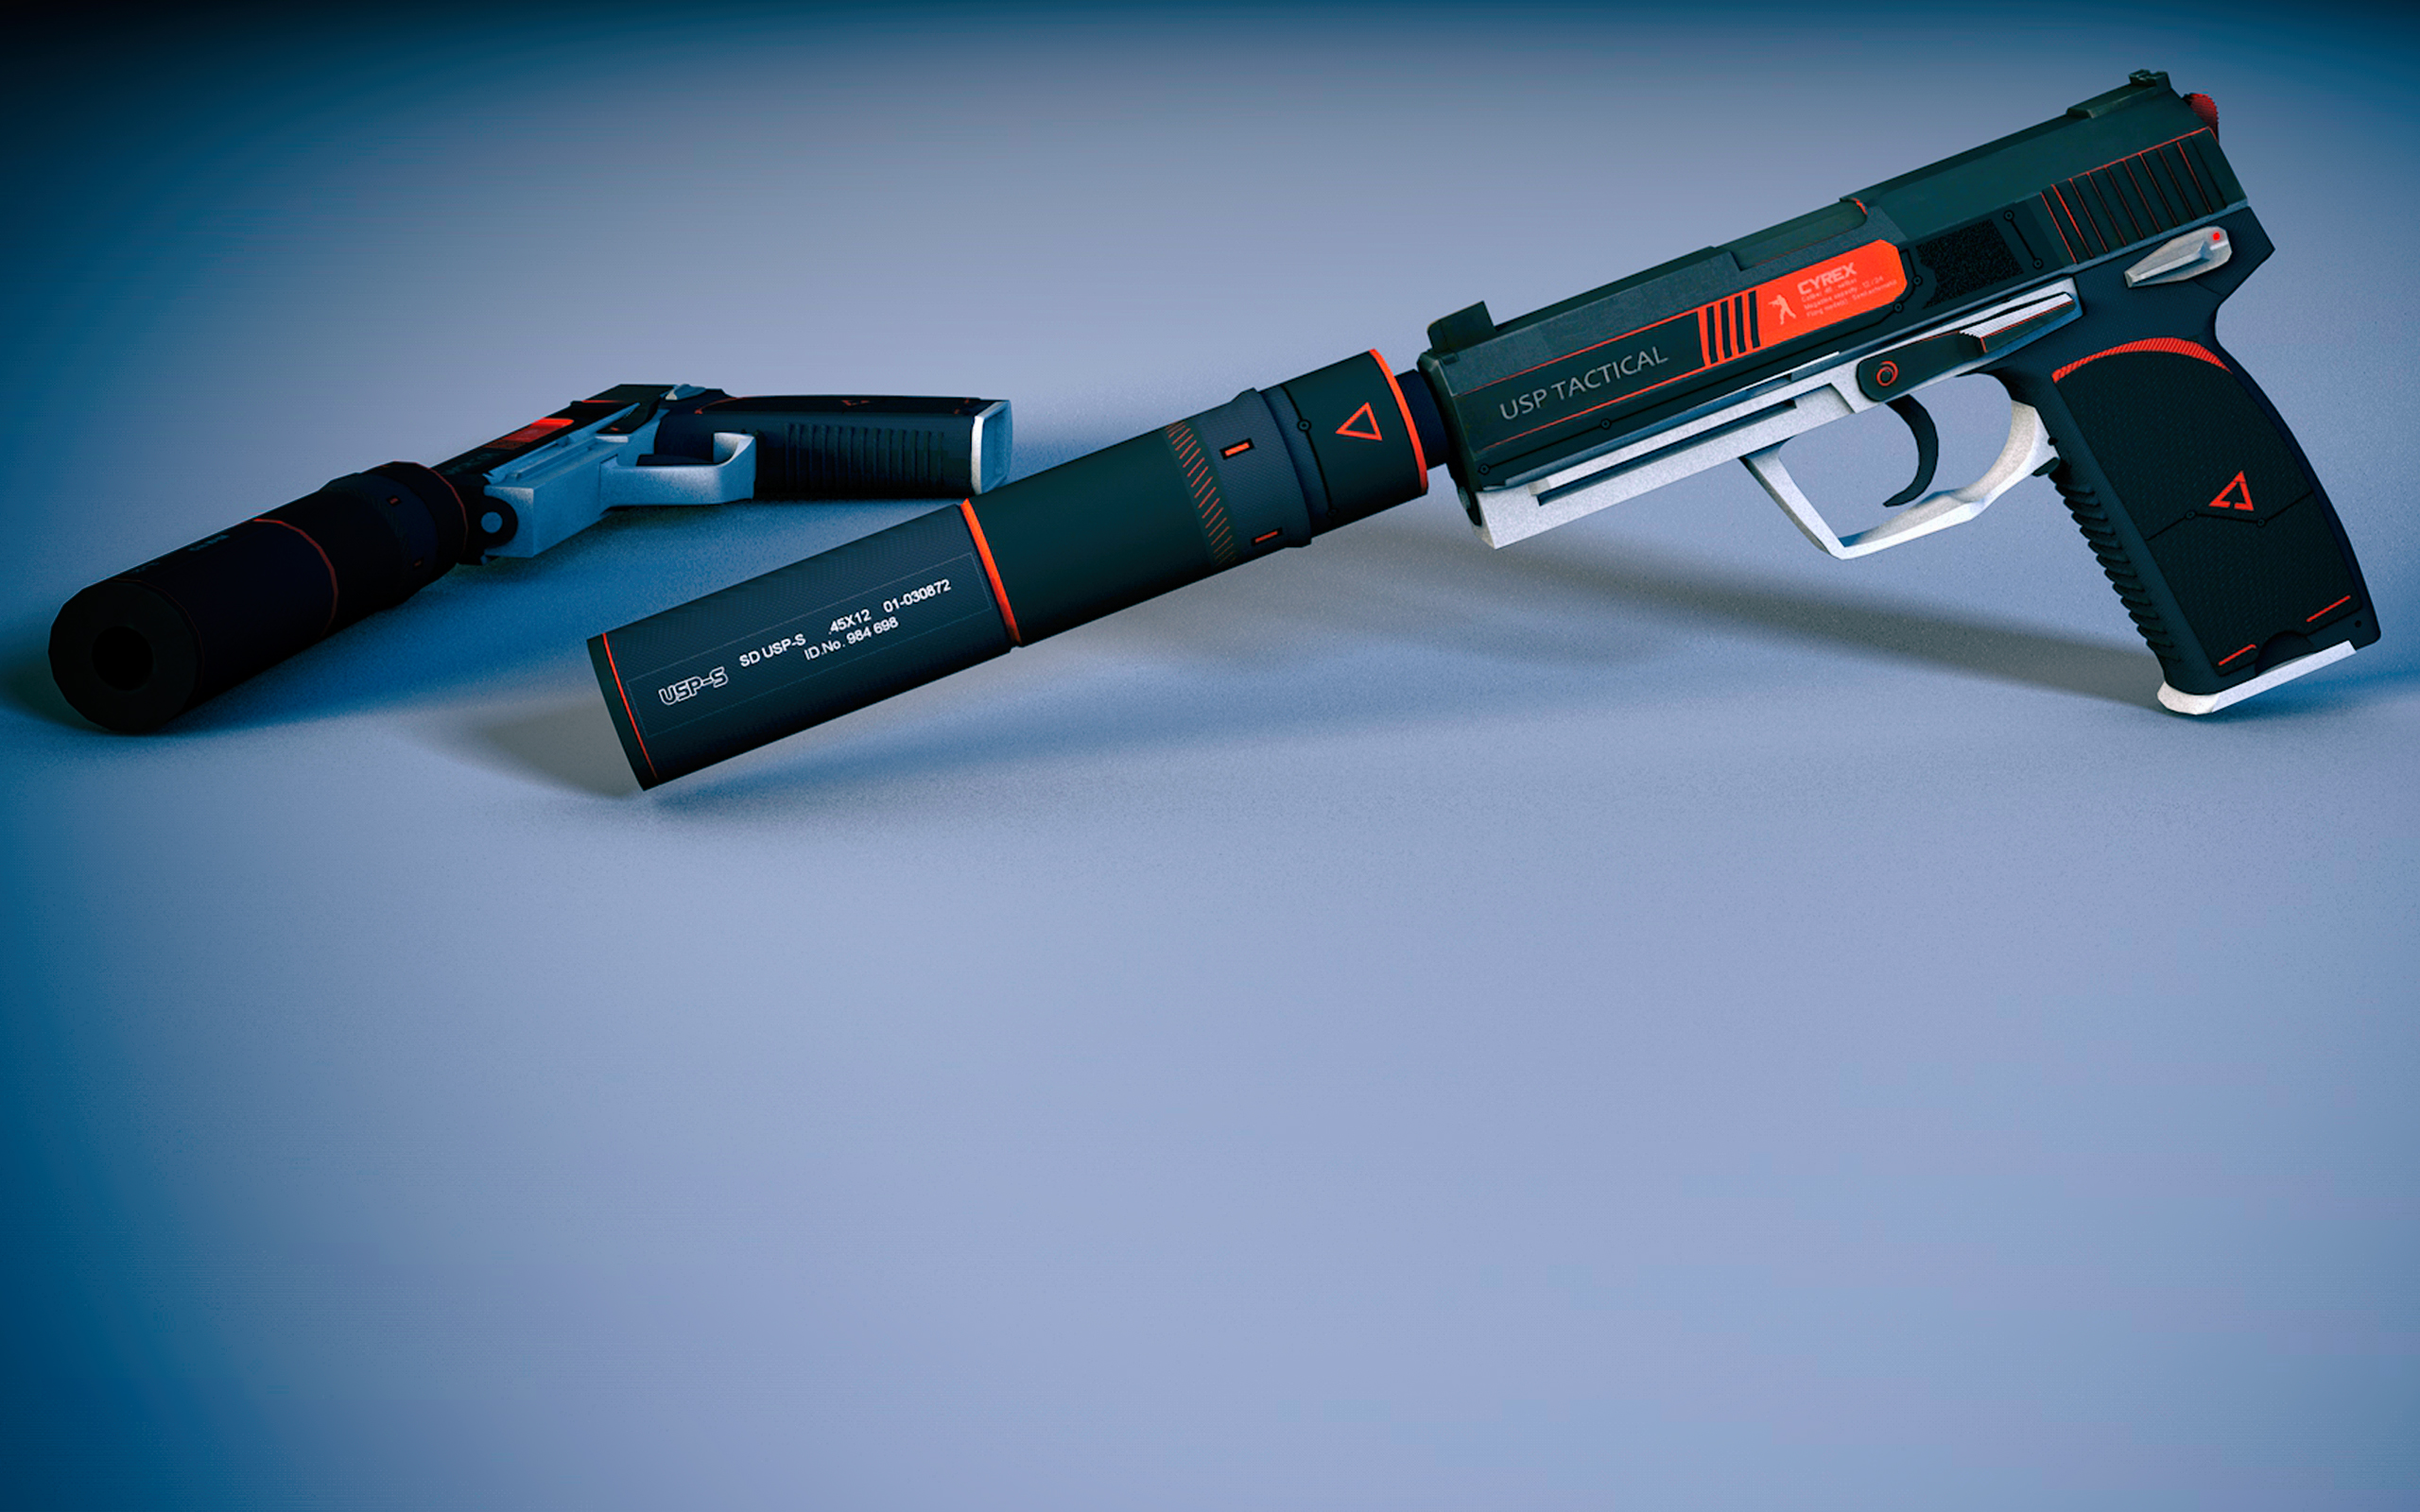 General 2560x1600 Counter-Strike Counter-Strike: Global Offensive weapon pistol gun video games Heckler & Koch USP German firearms Valve Corporation